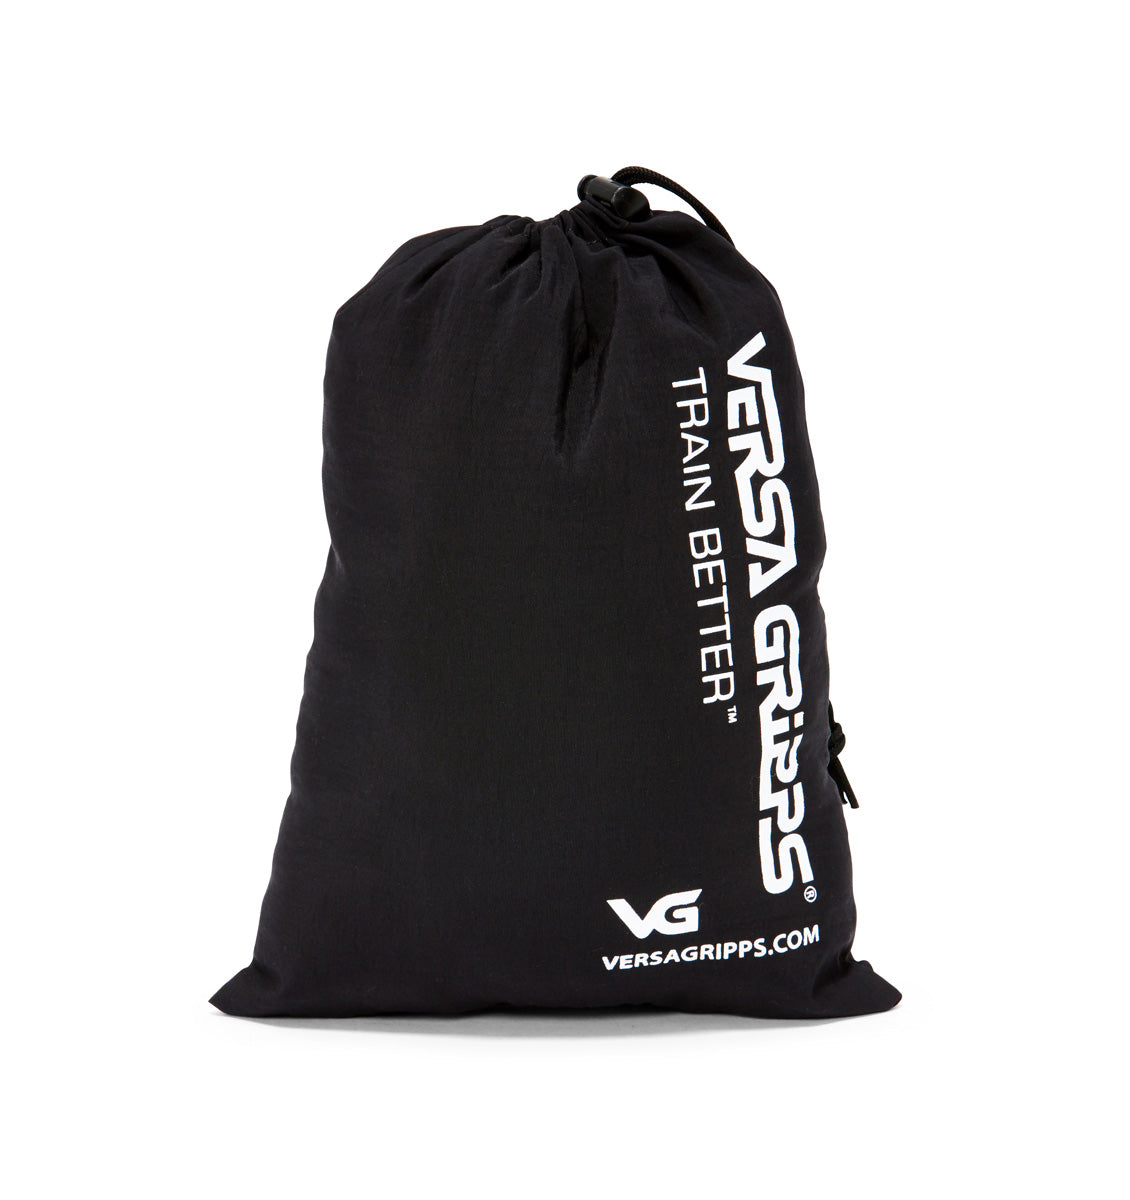 Versa Gripps Breathable 100% Taslan VG Stuffsak Bag Black Front